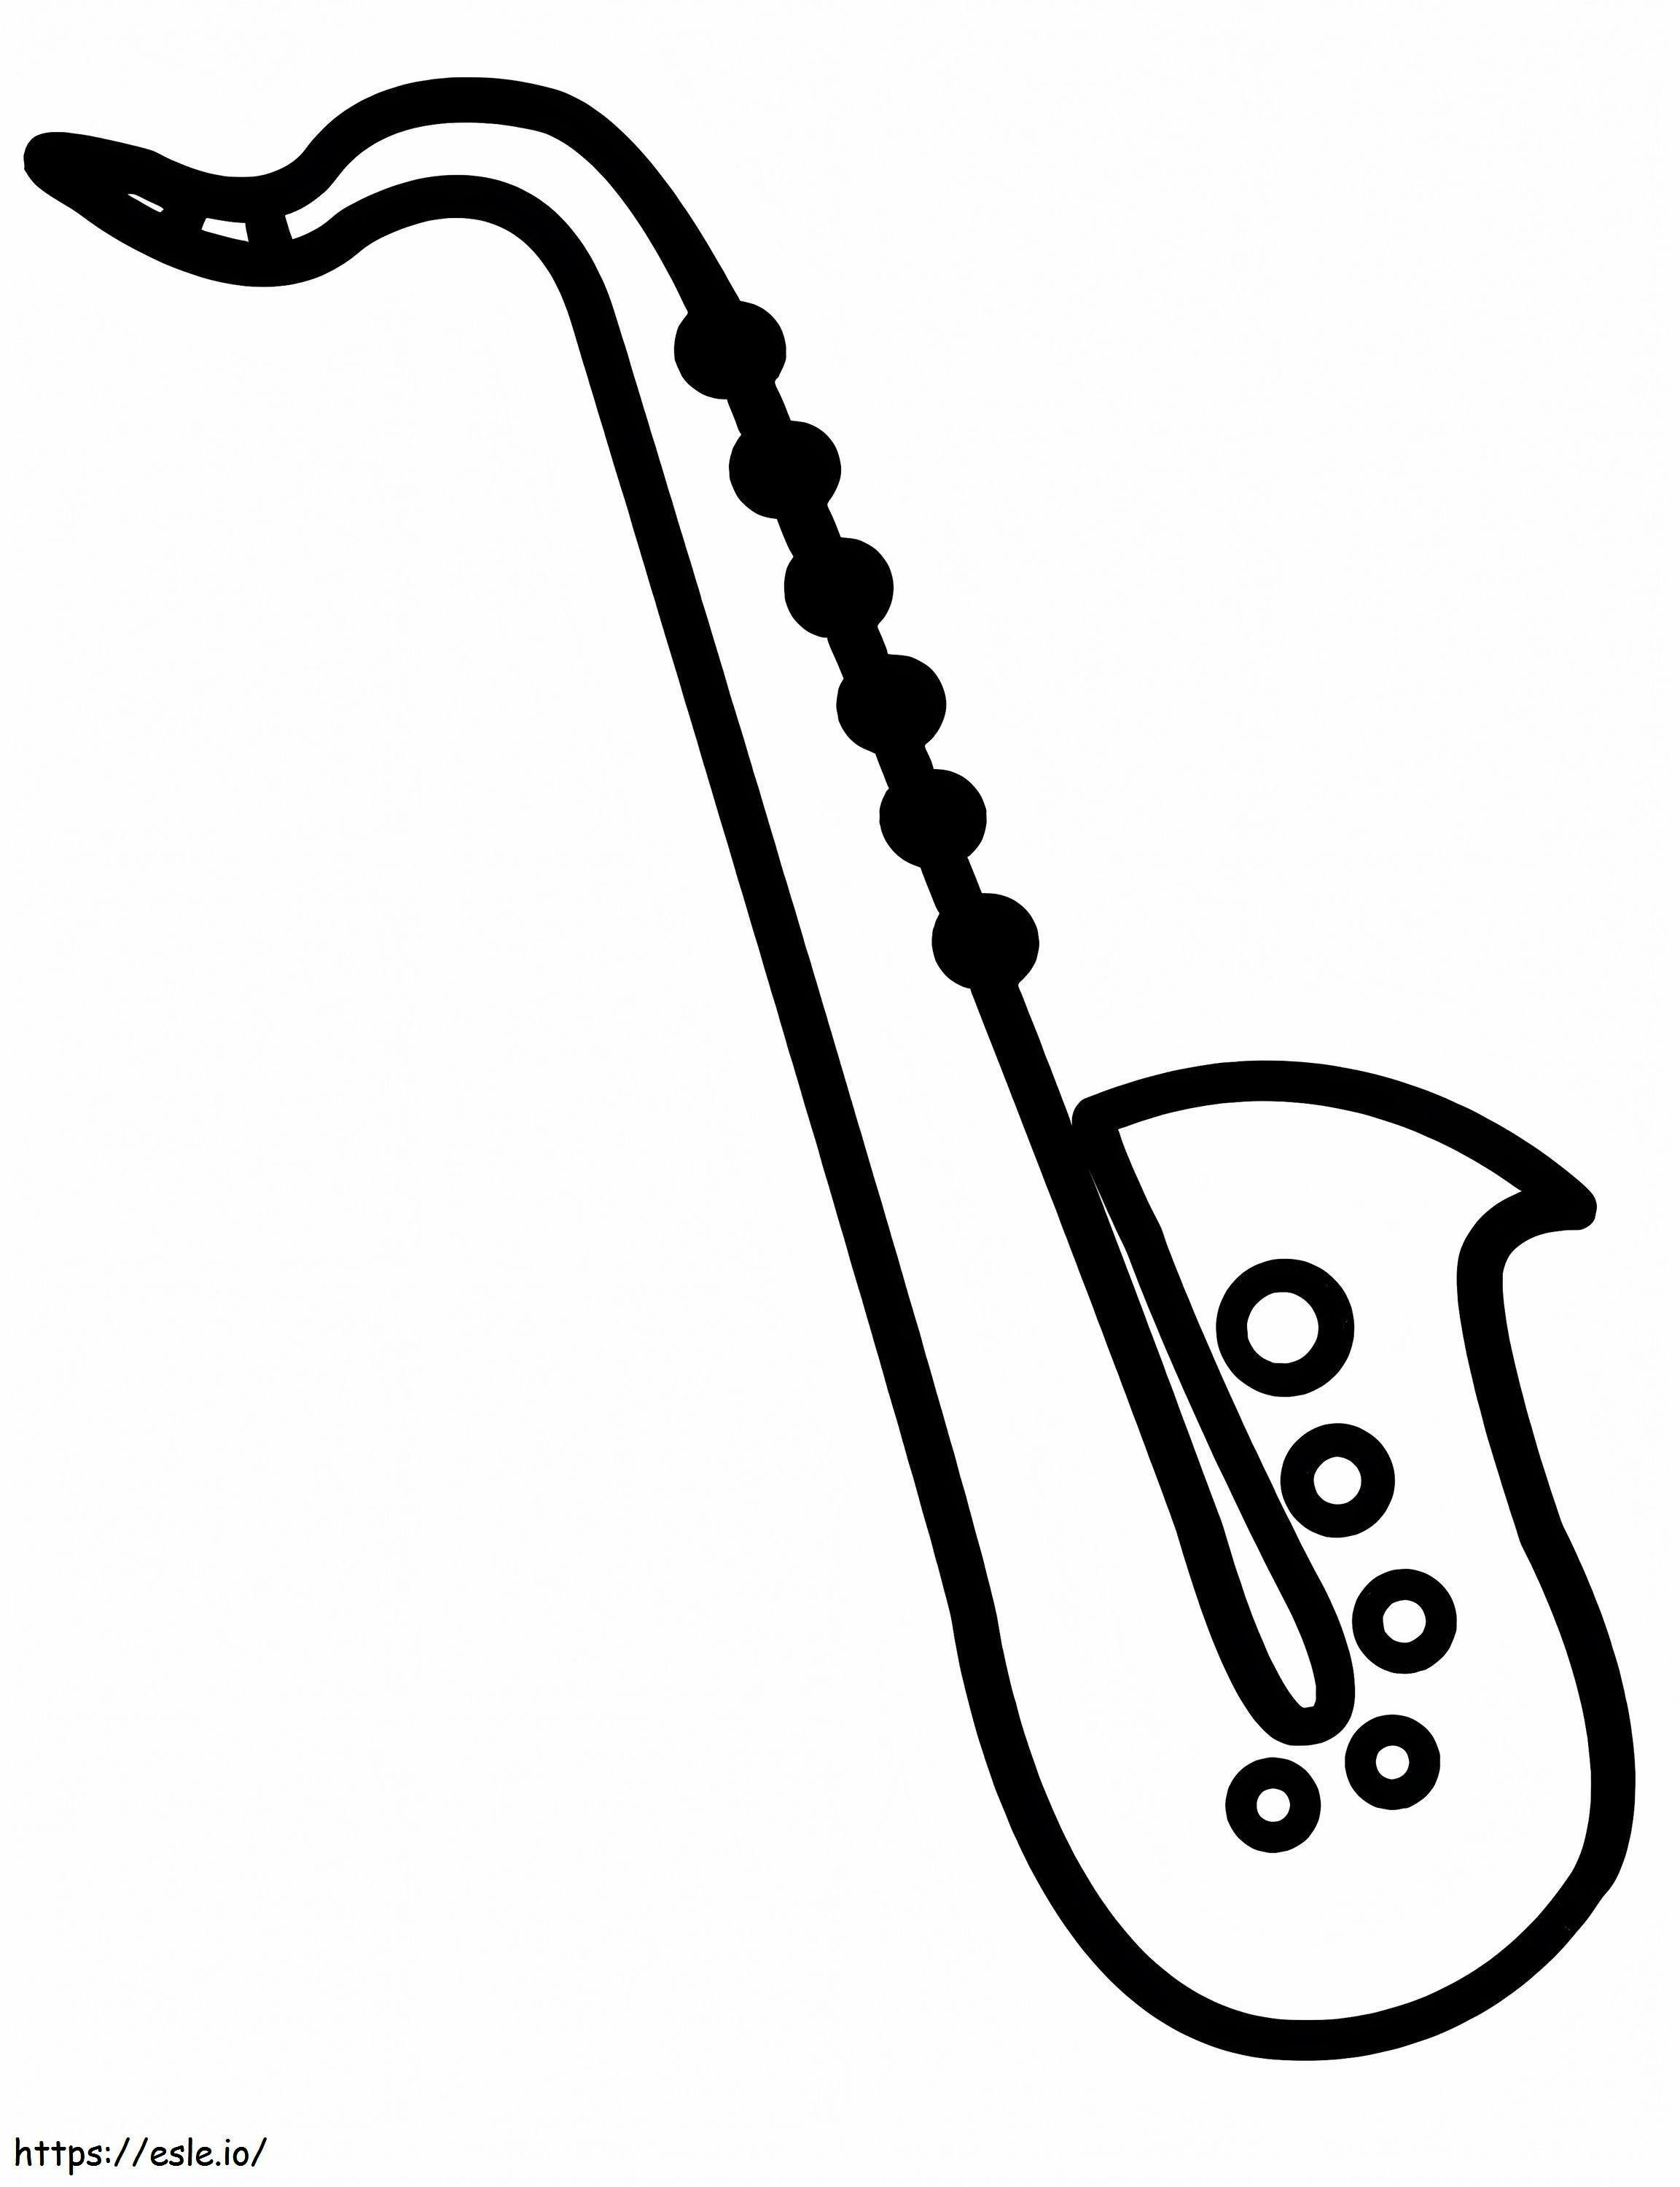 Desenho simples de saxofone para colorir